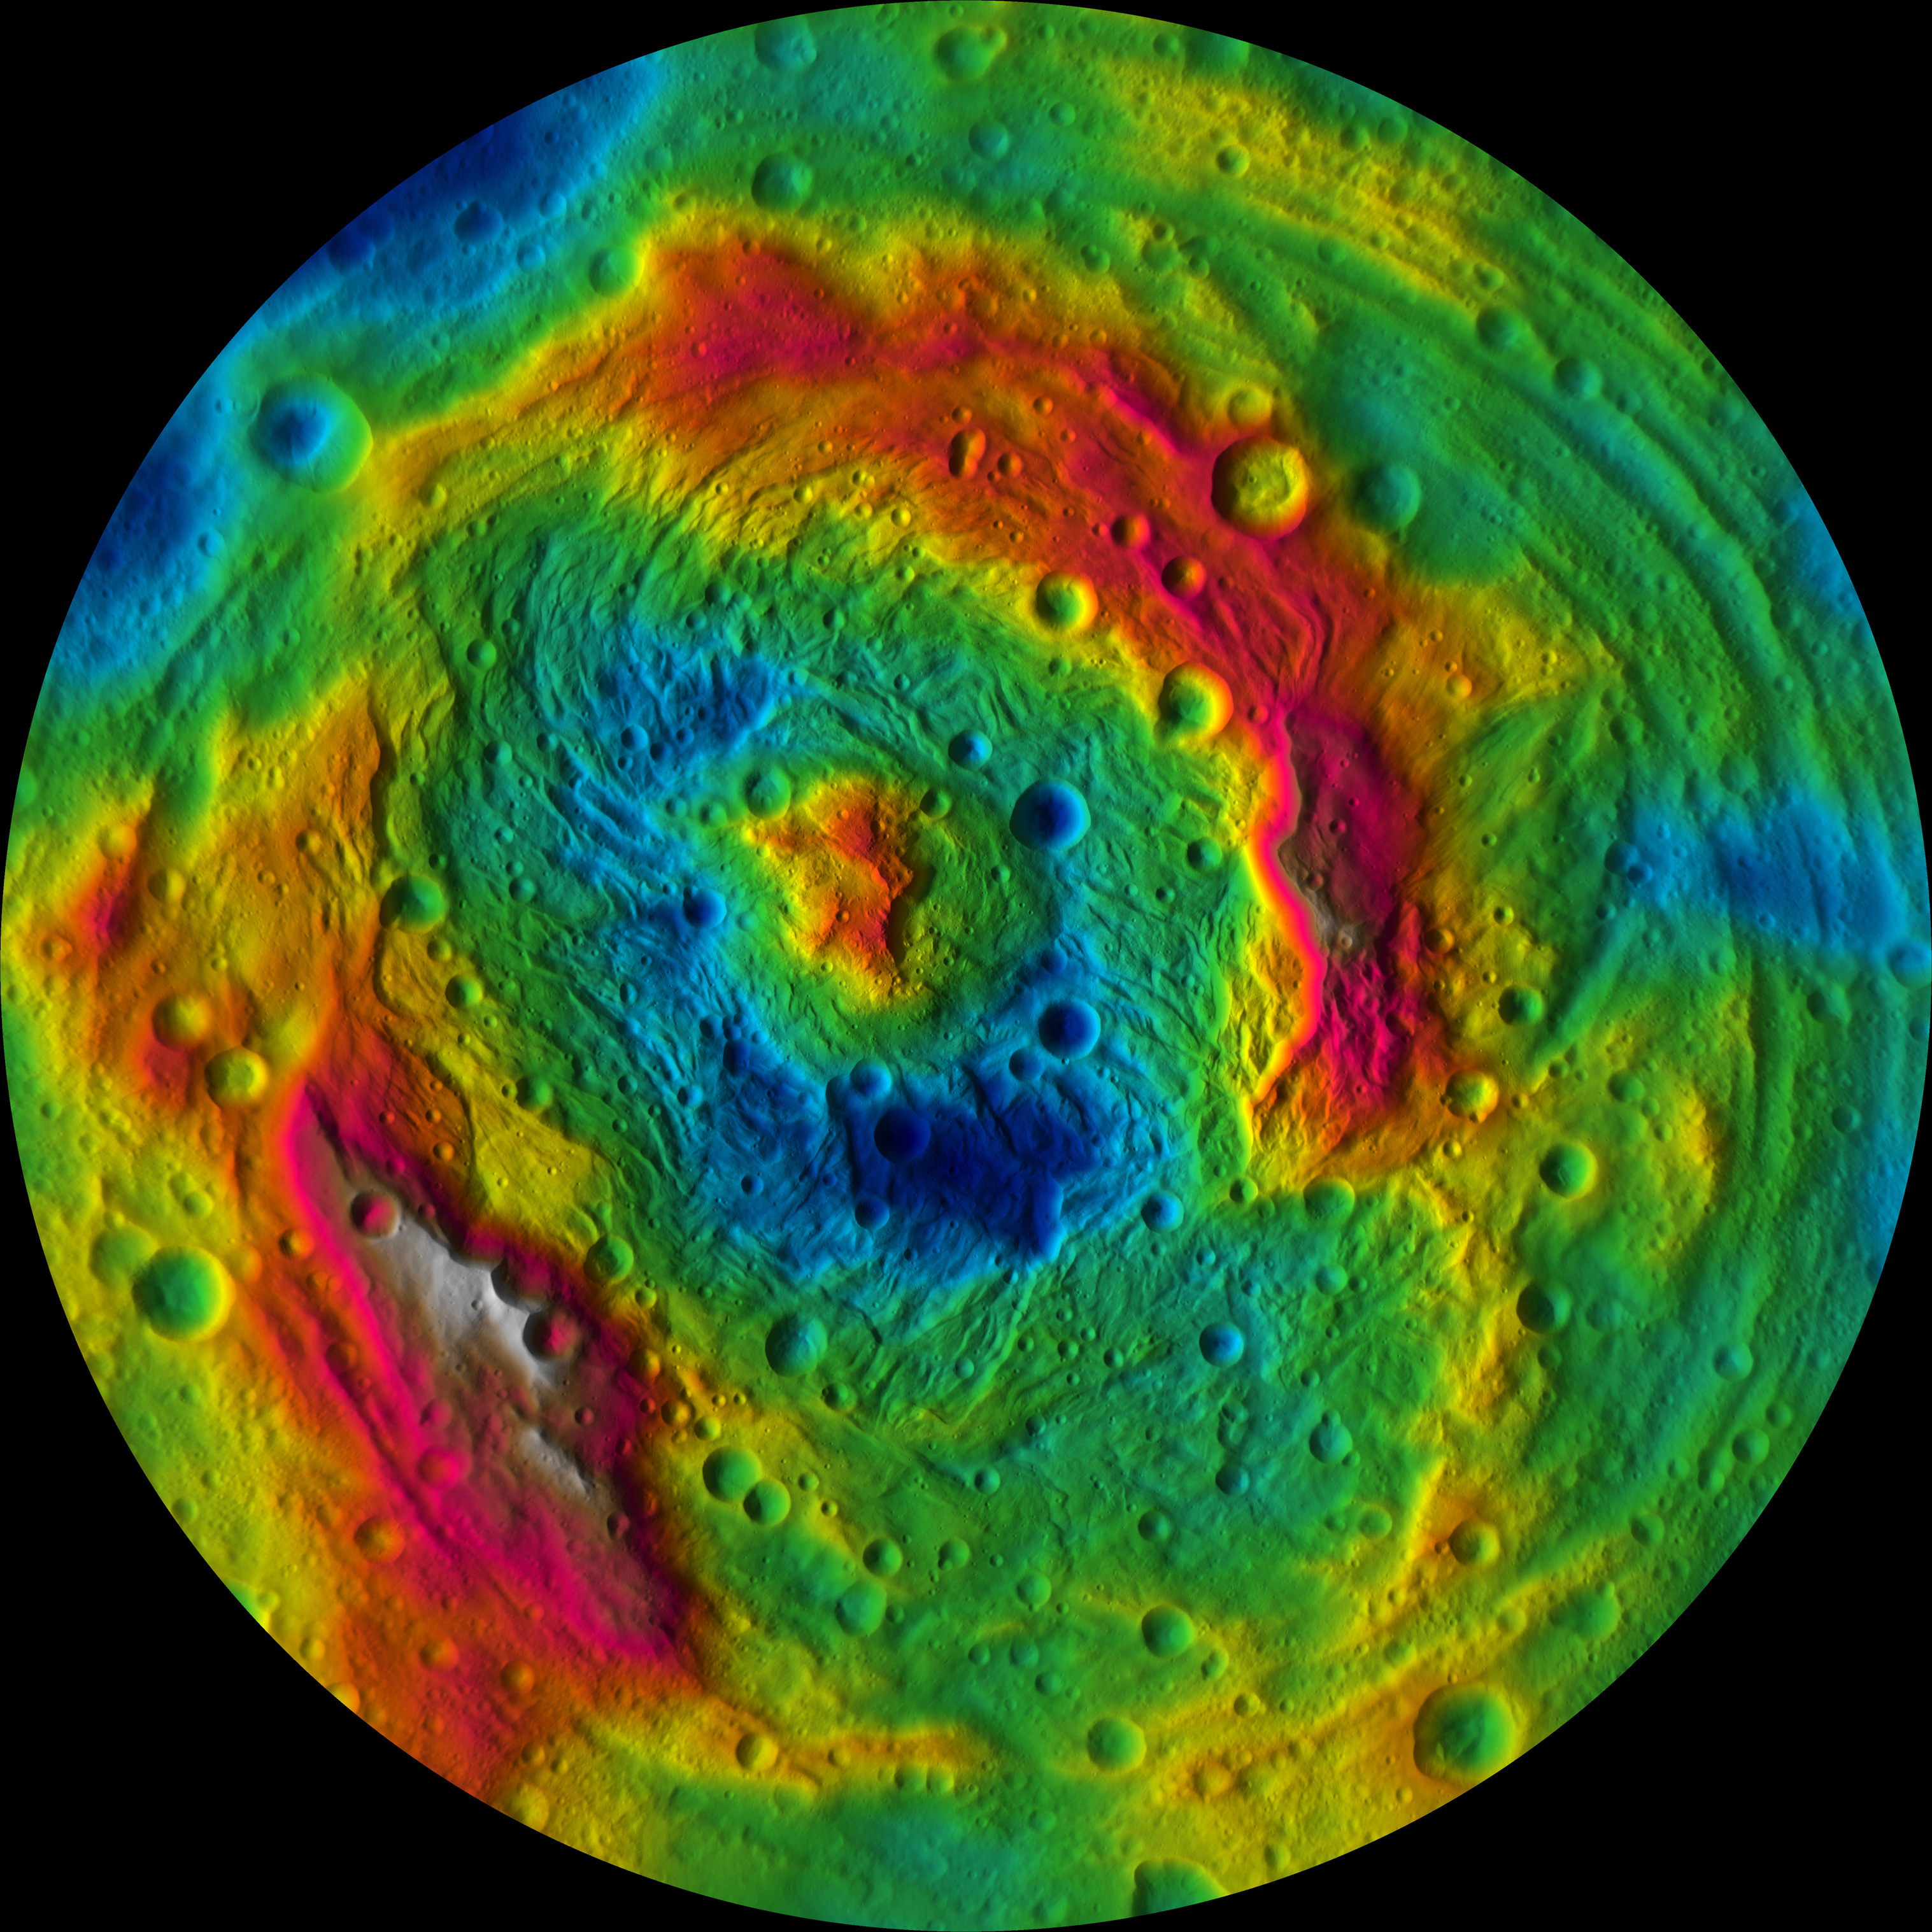 Color enhanced view of asteroid Vesta